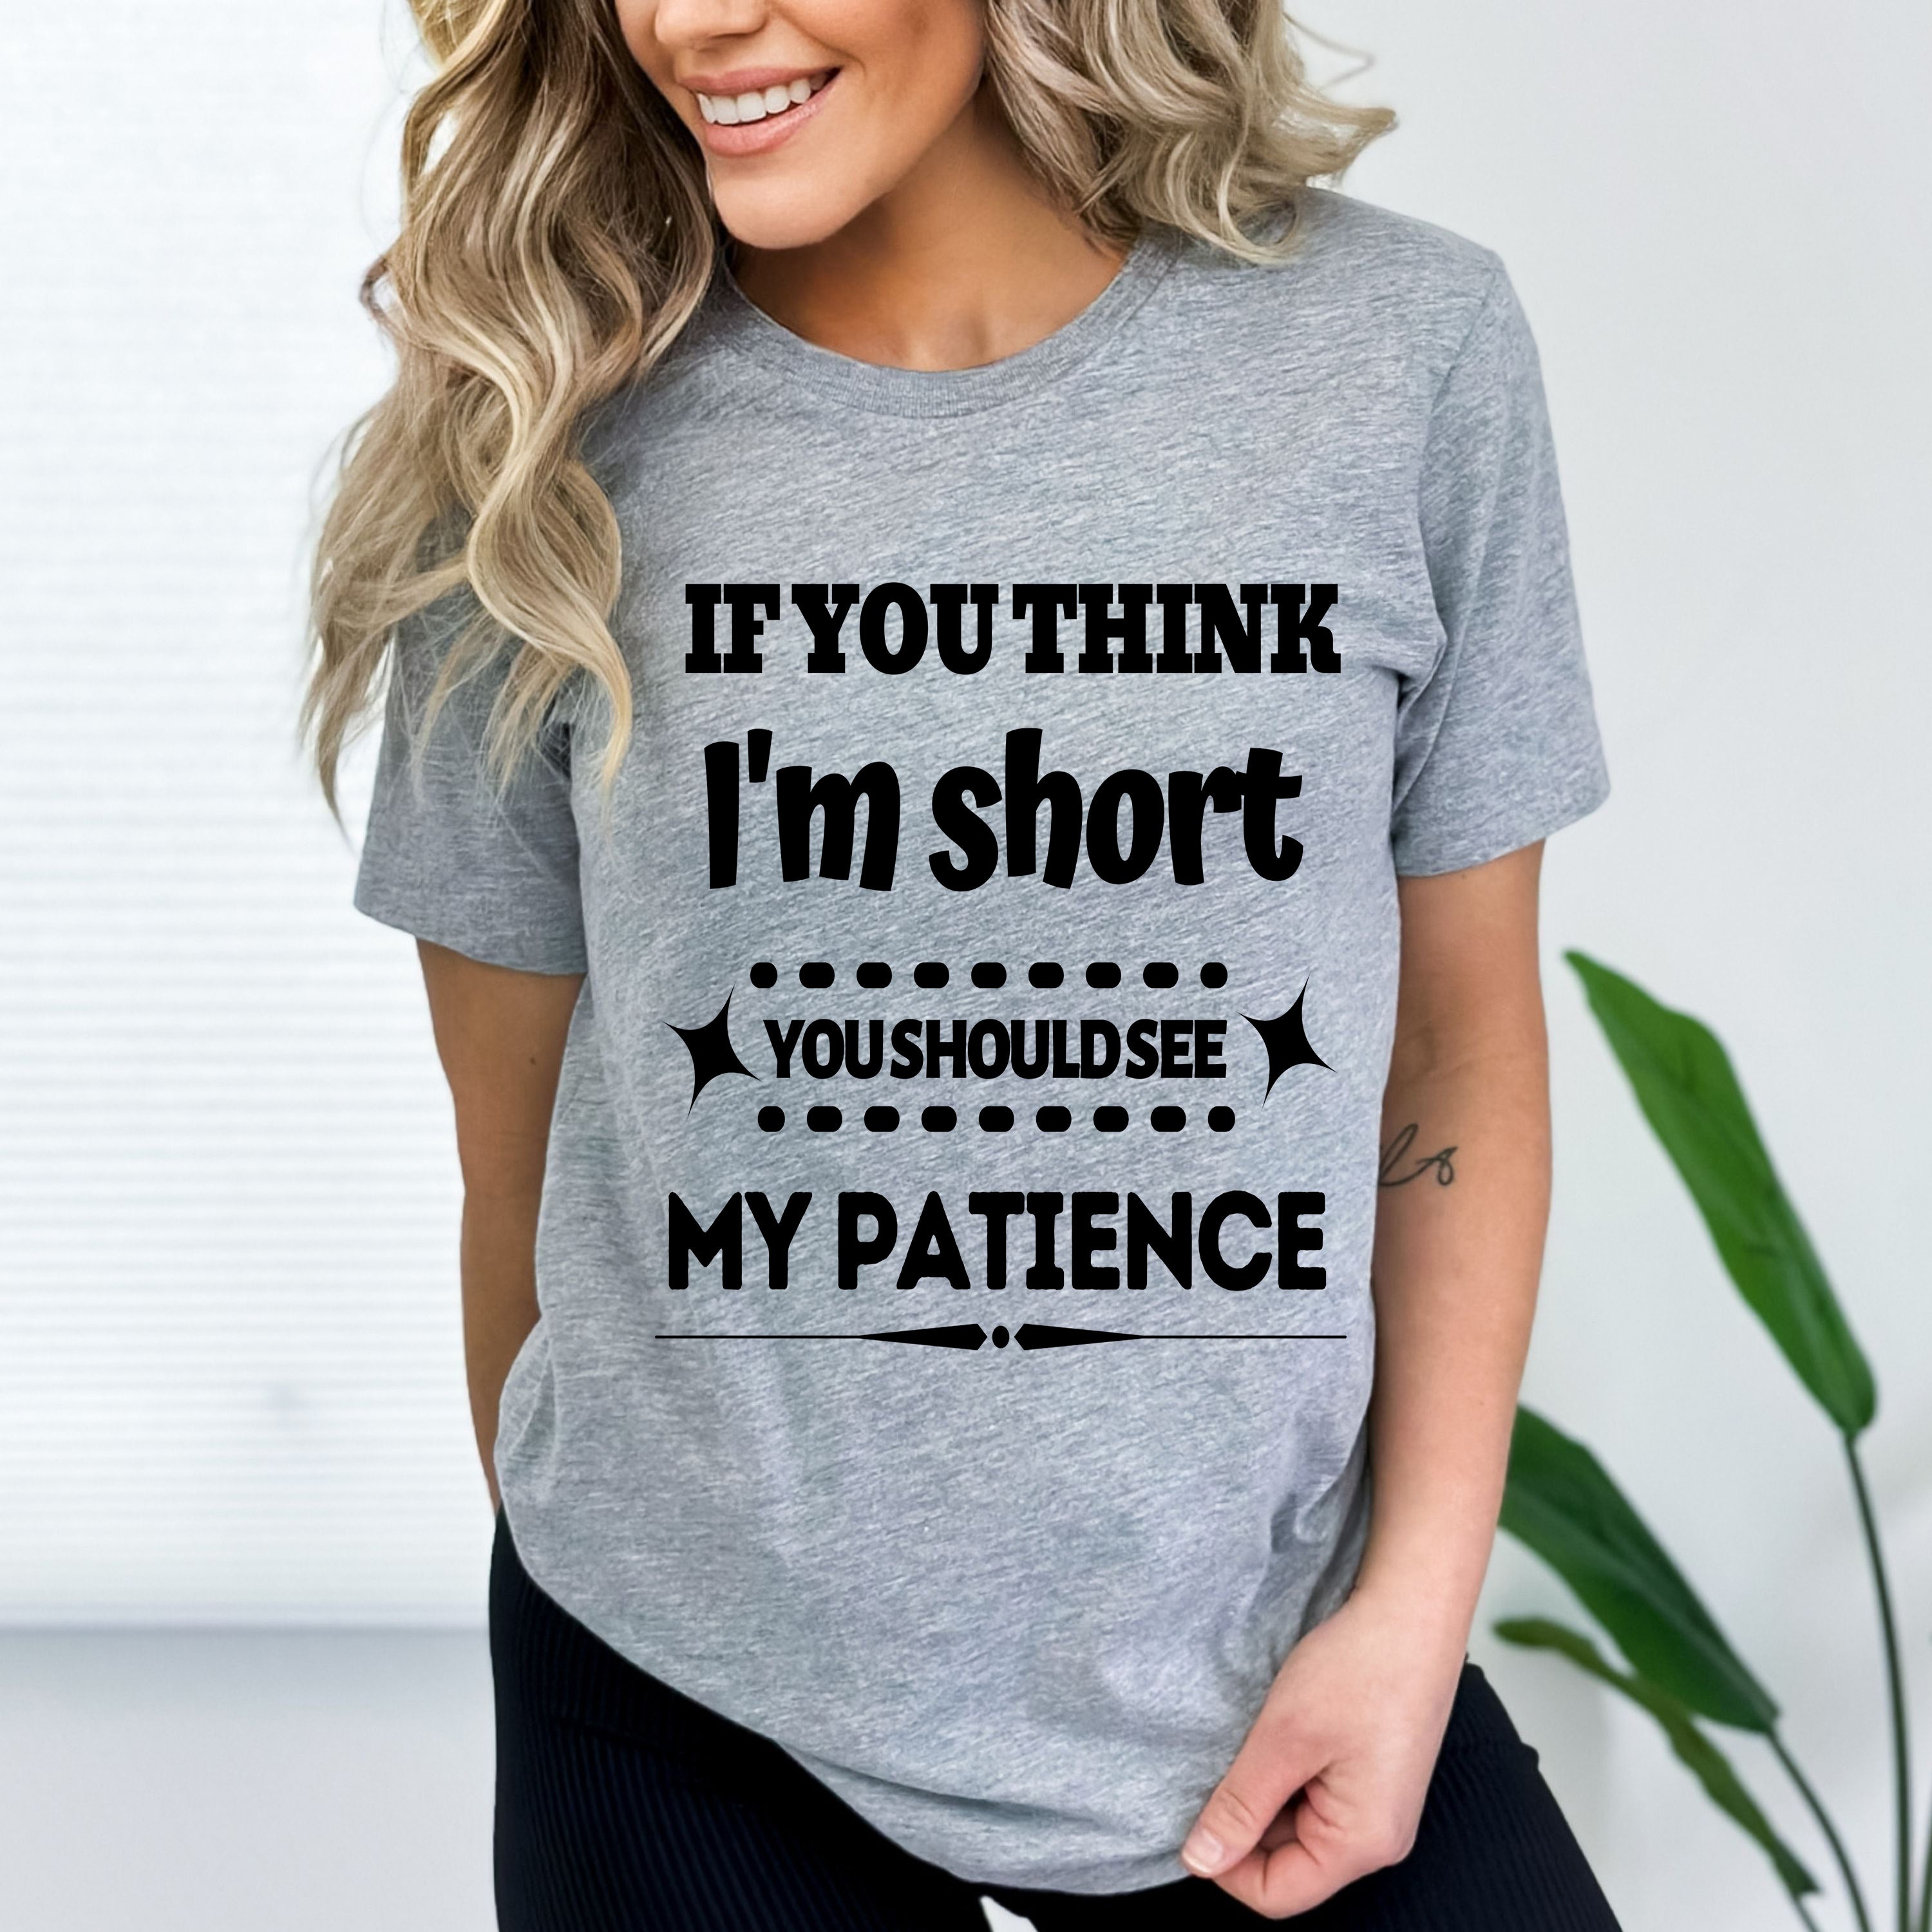 "IF YOU THINK I'M SHORT" T-shirt